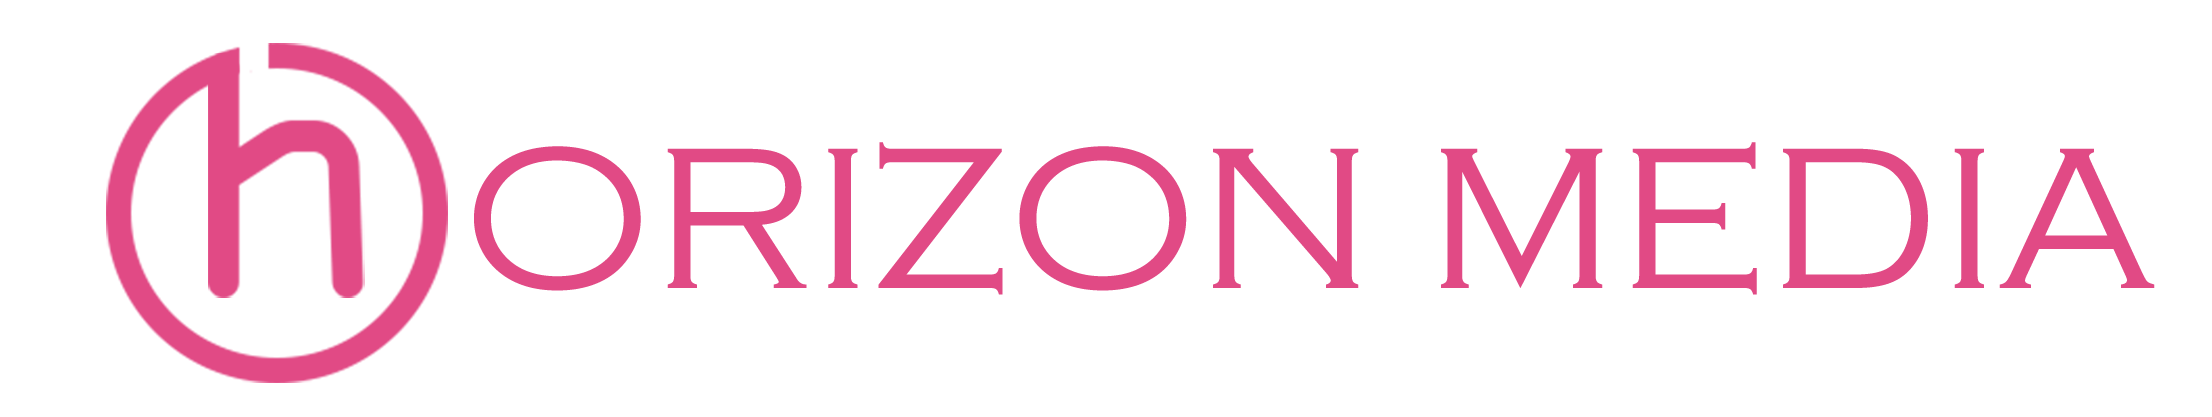 Horizon media